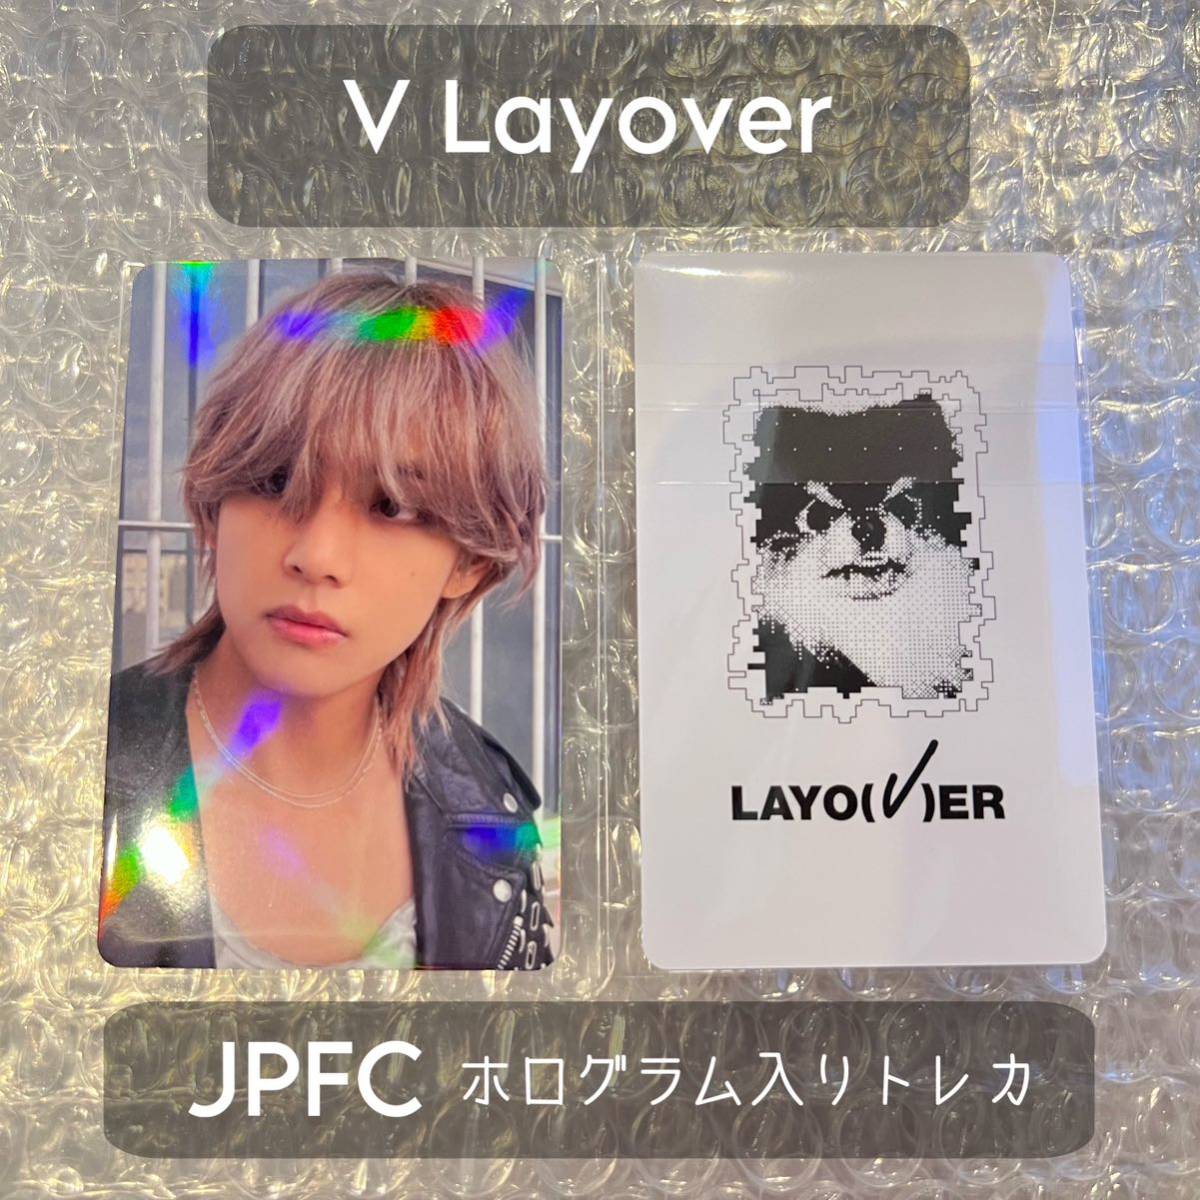 BTS V Layover JPFC 限定トレカ-